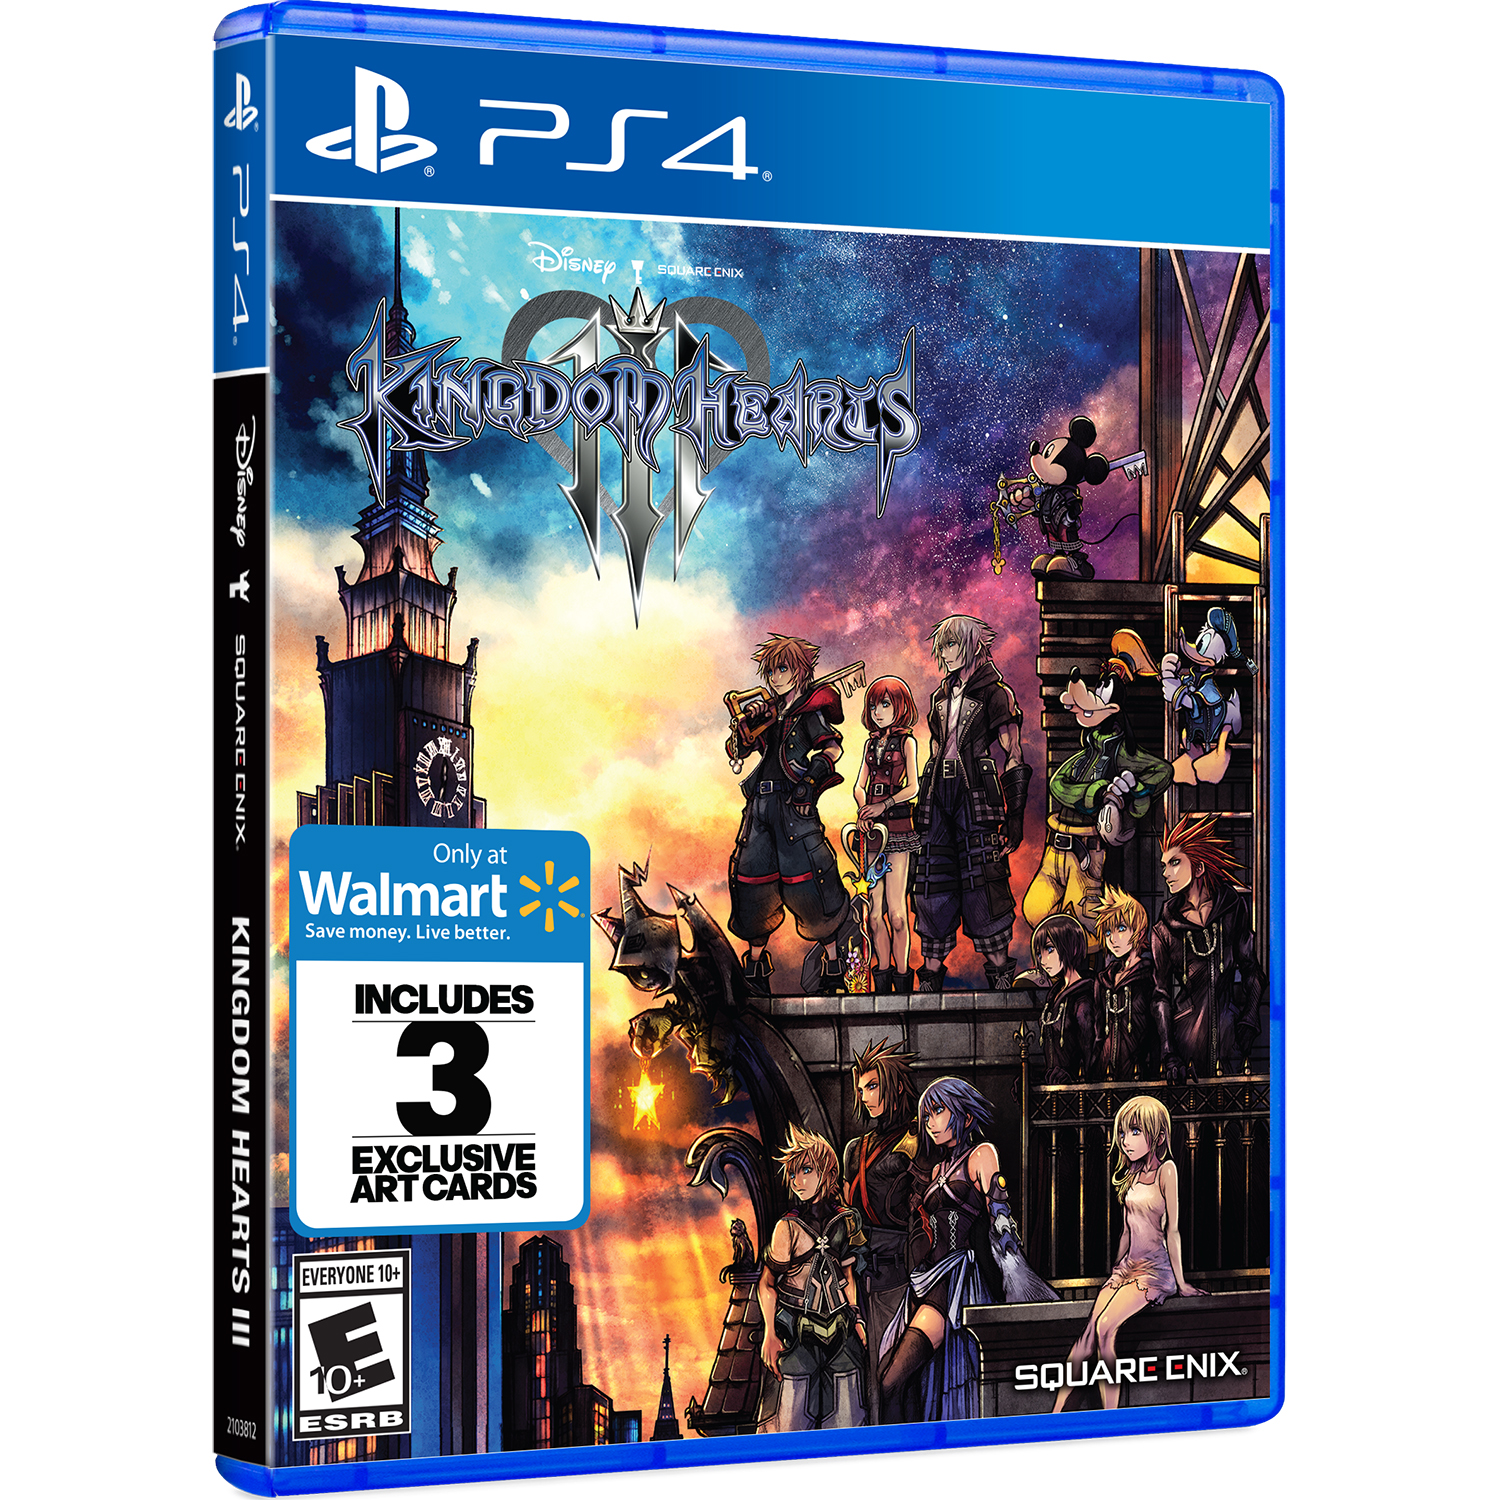 Walmart Exclusive: Kingdom Hearts 3, Square Enix, PlayStation 4, 662248921907 - image 1 of 40